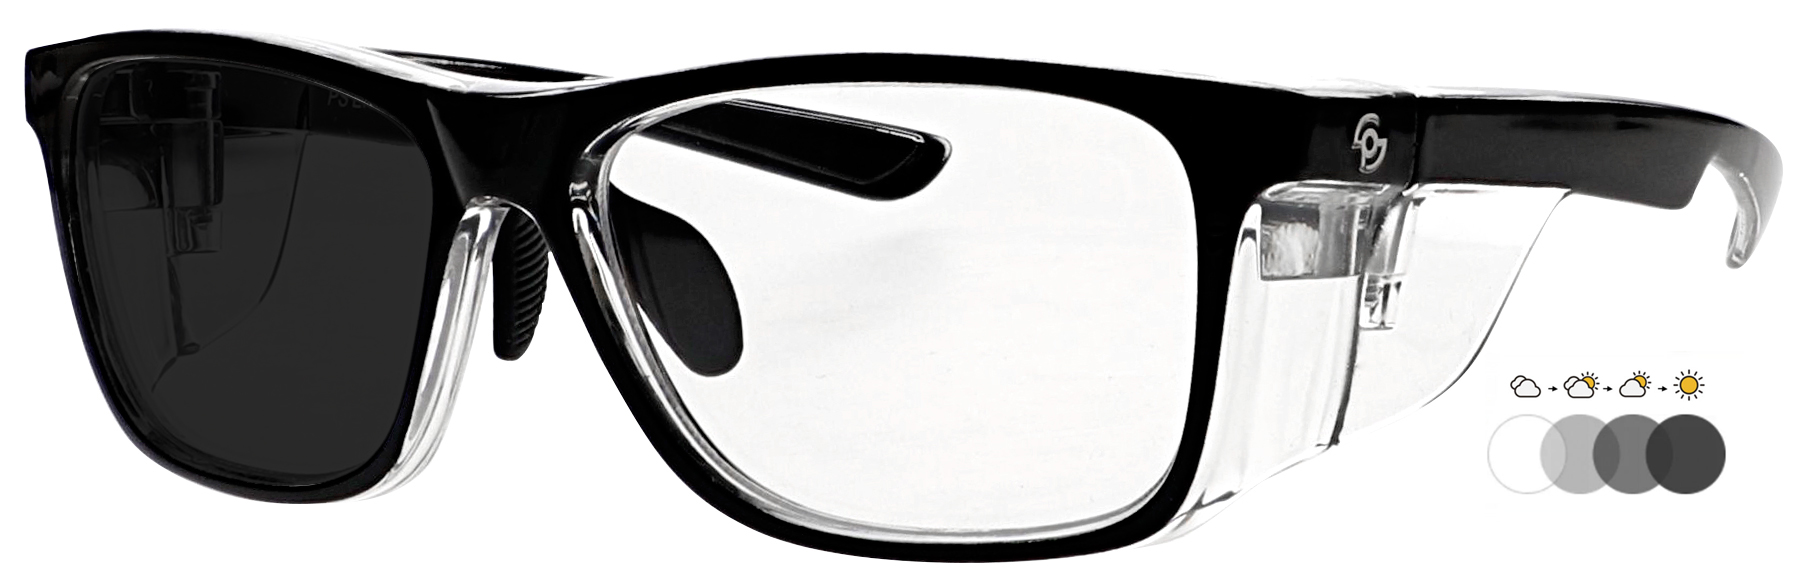 Transition Lens Safety Glasses